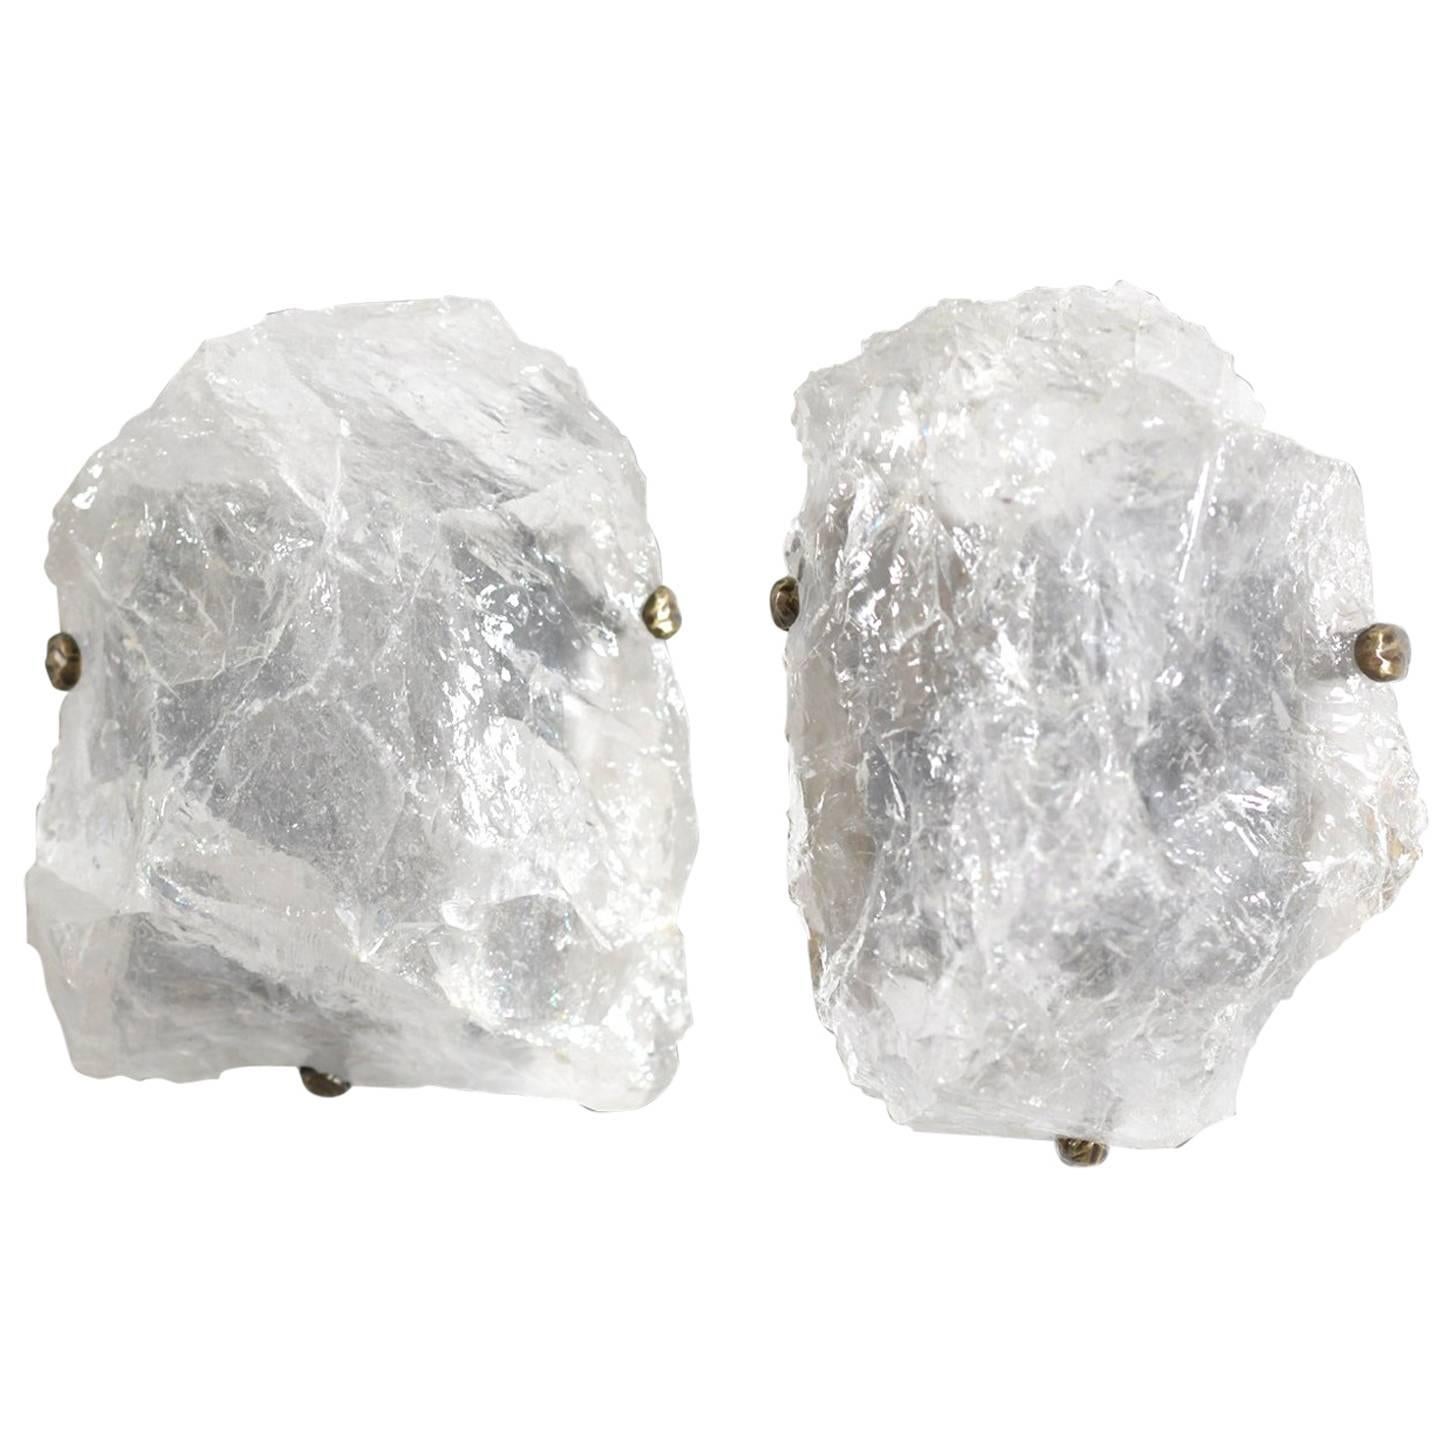  Pair of Natural Rock Crystal Quartz Wall Sconces